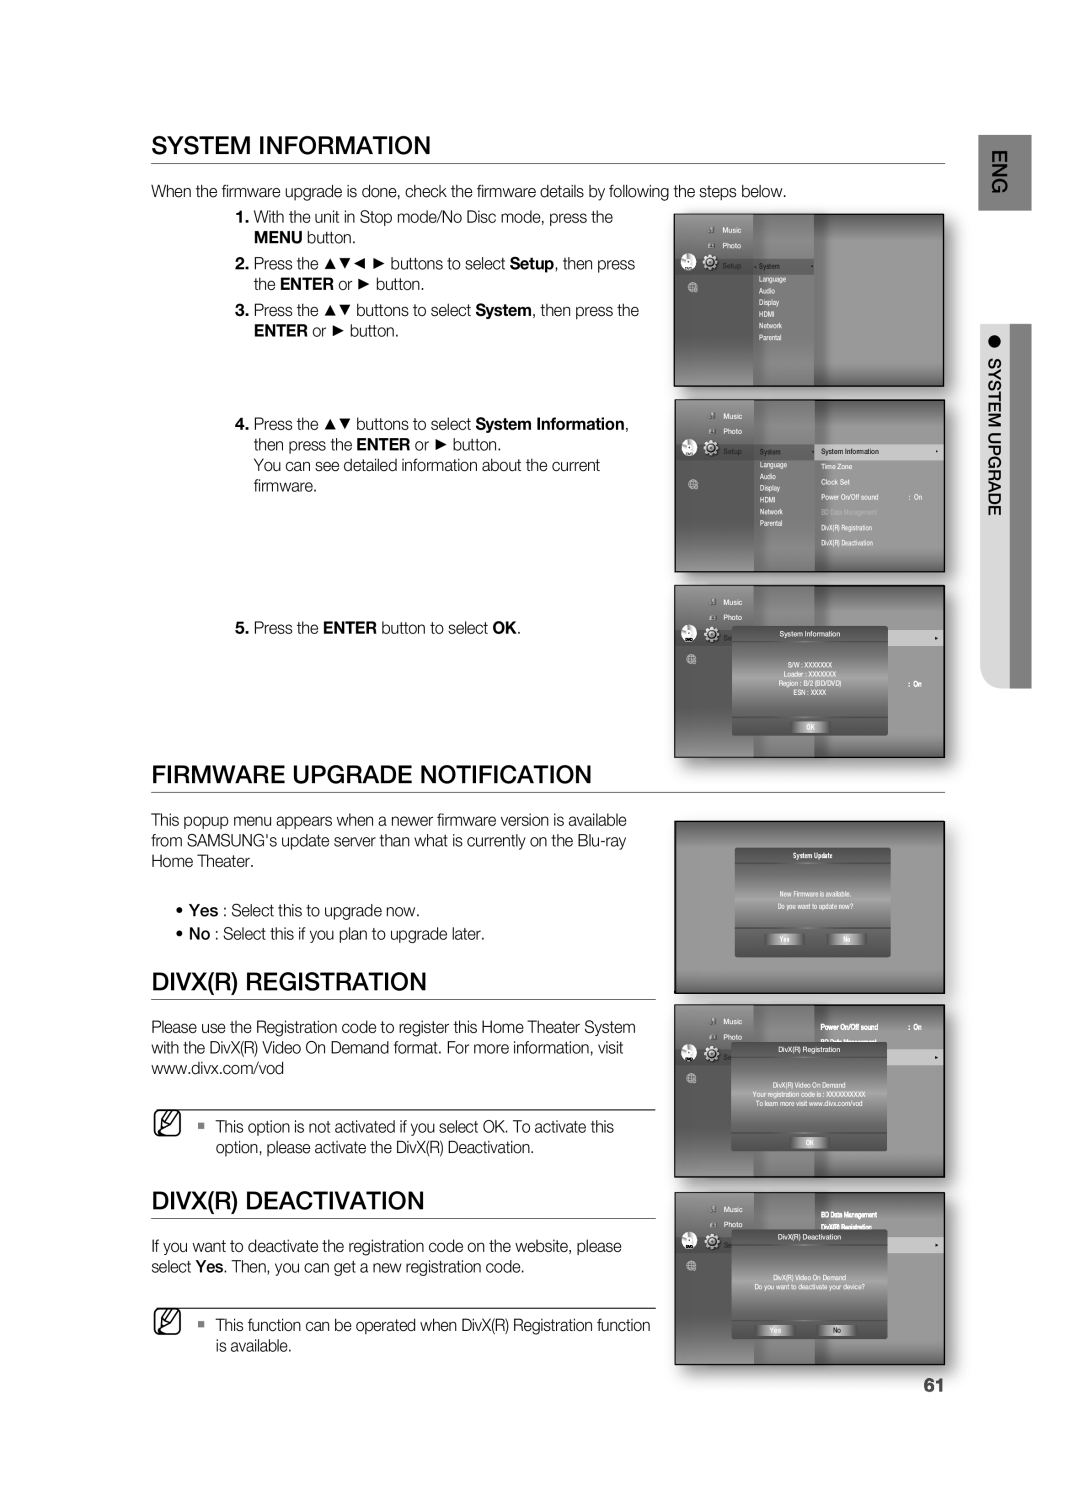 Samsung HT-BD3252A, AH68-02231A System Information, Firmware Upgrade Notification, Divxr Registration, Divxr Deactivation 